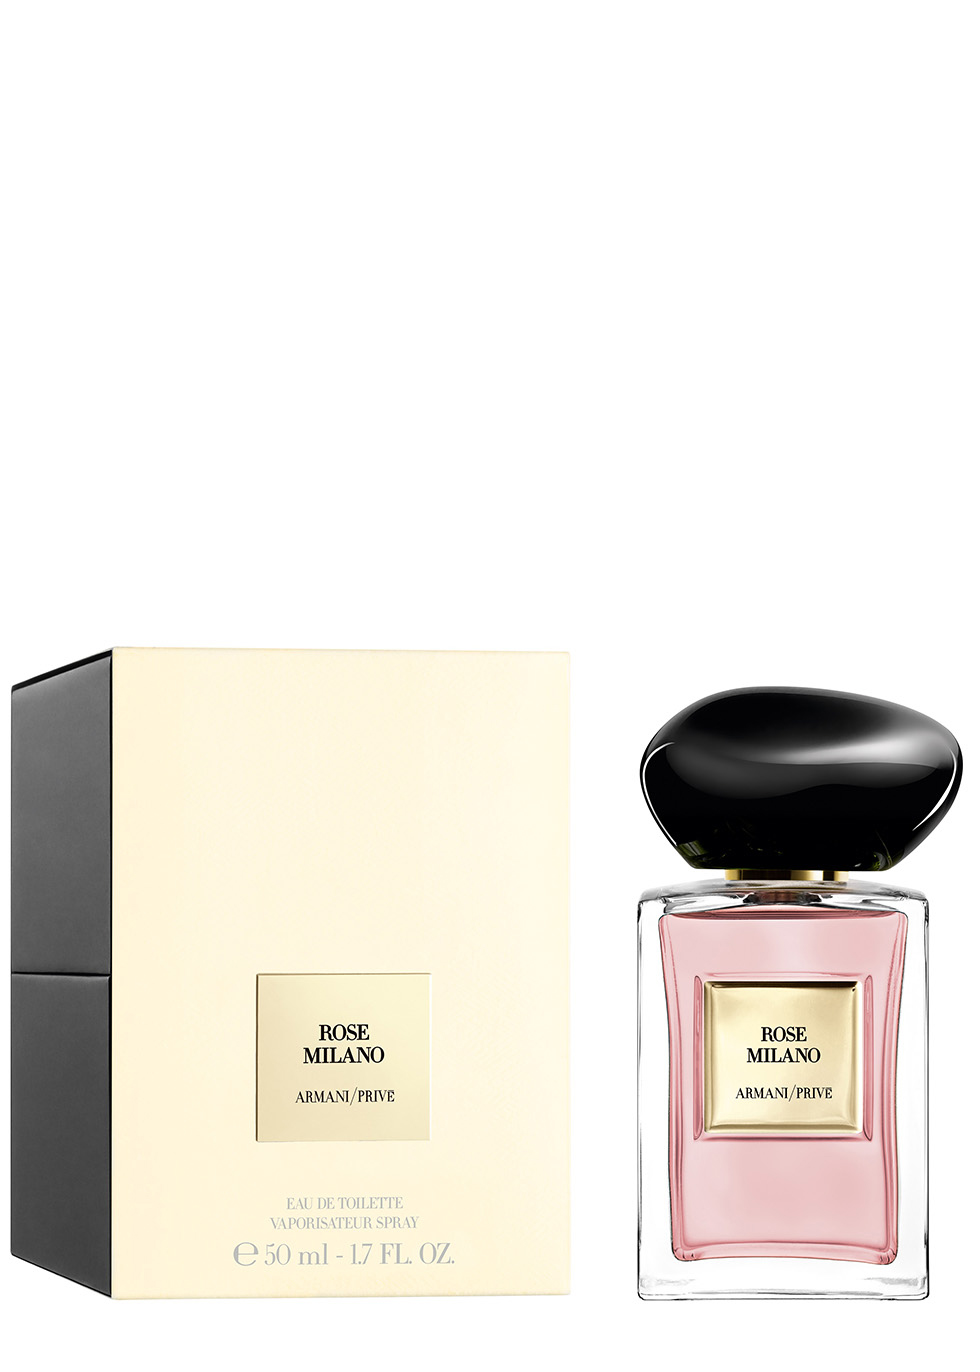 armani rose perfume 50ml